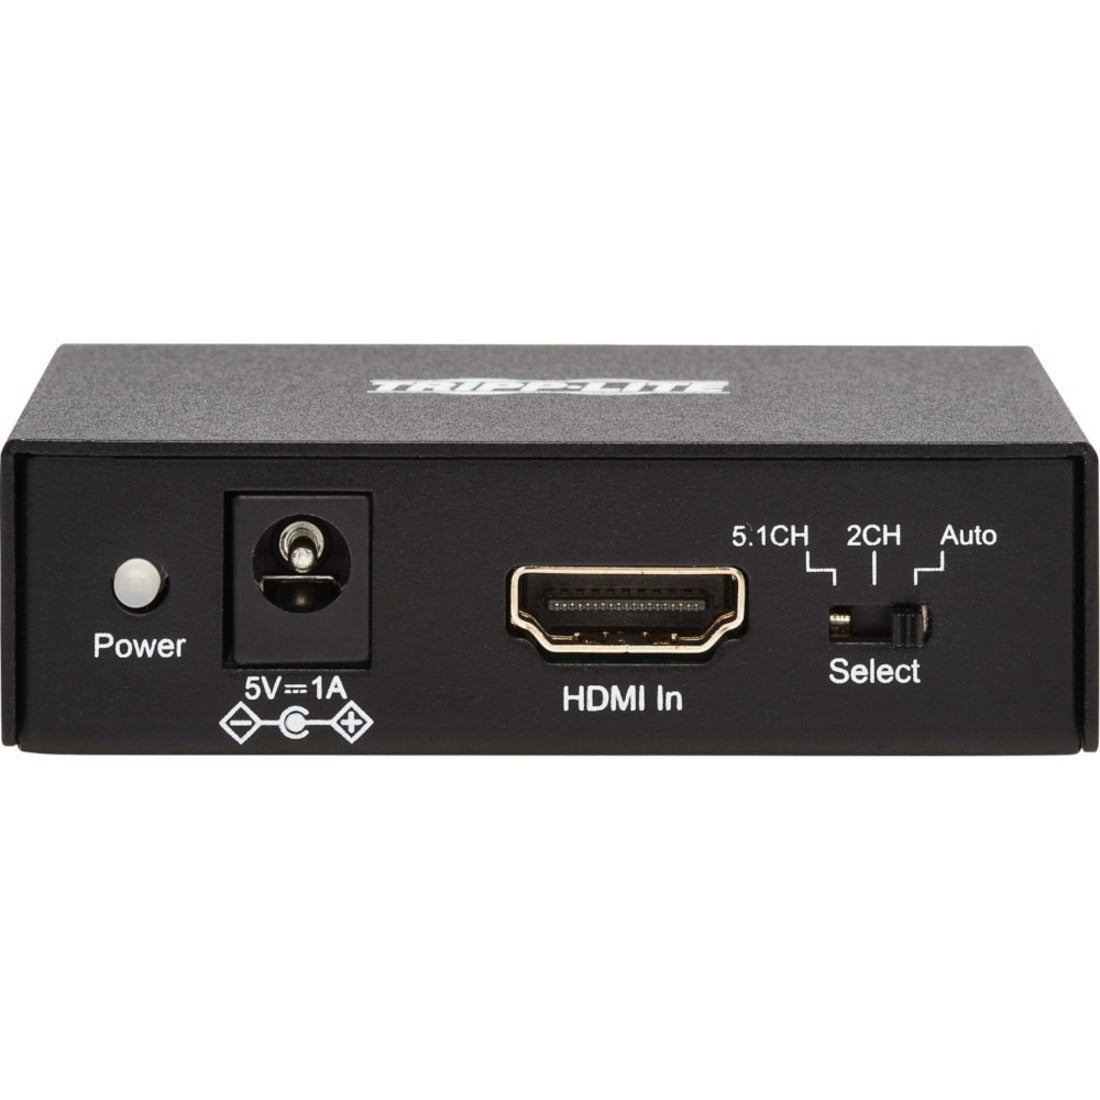 Tripp Lite P130-000-AUDIO2 4K HDMI Audio De-Embedder/Extractor Signal Extractor for Enhanced Audio Experience